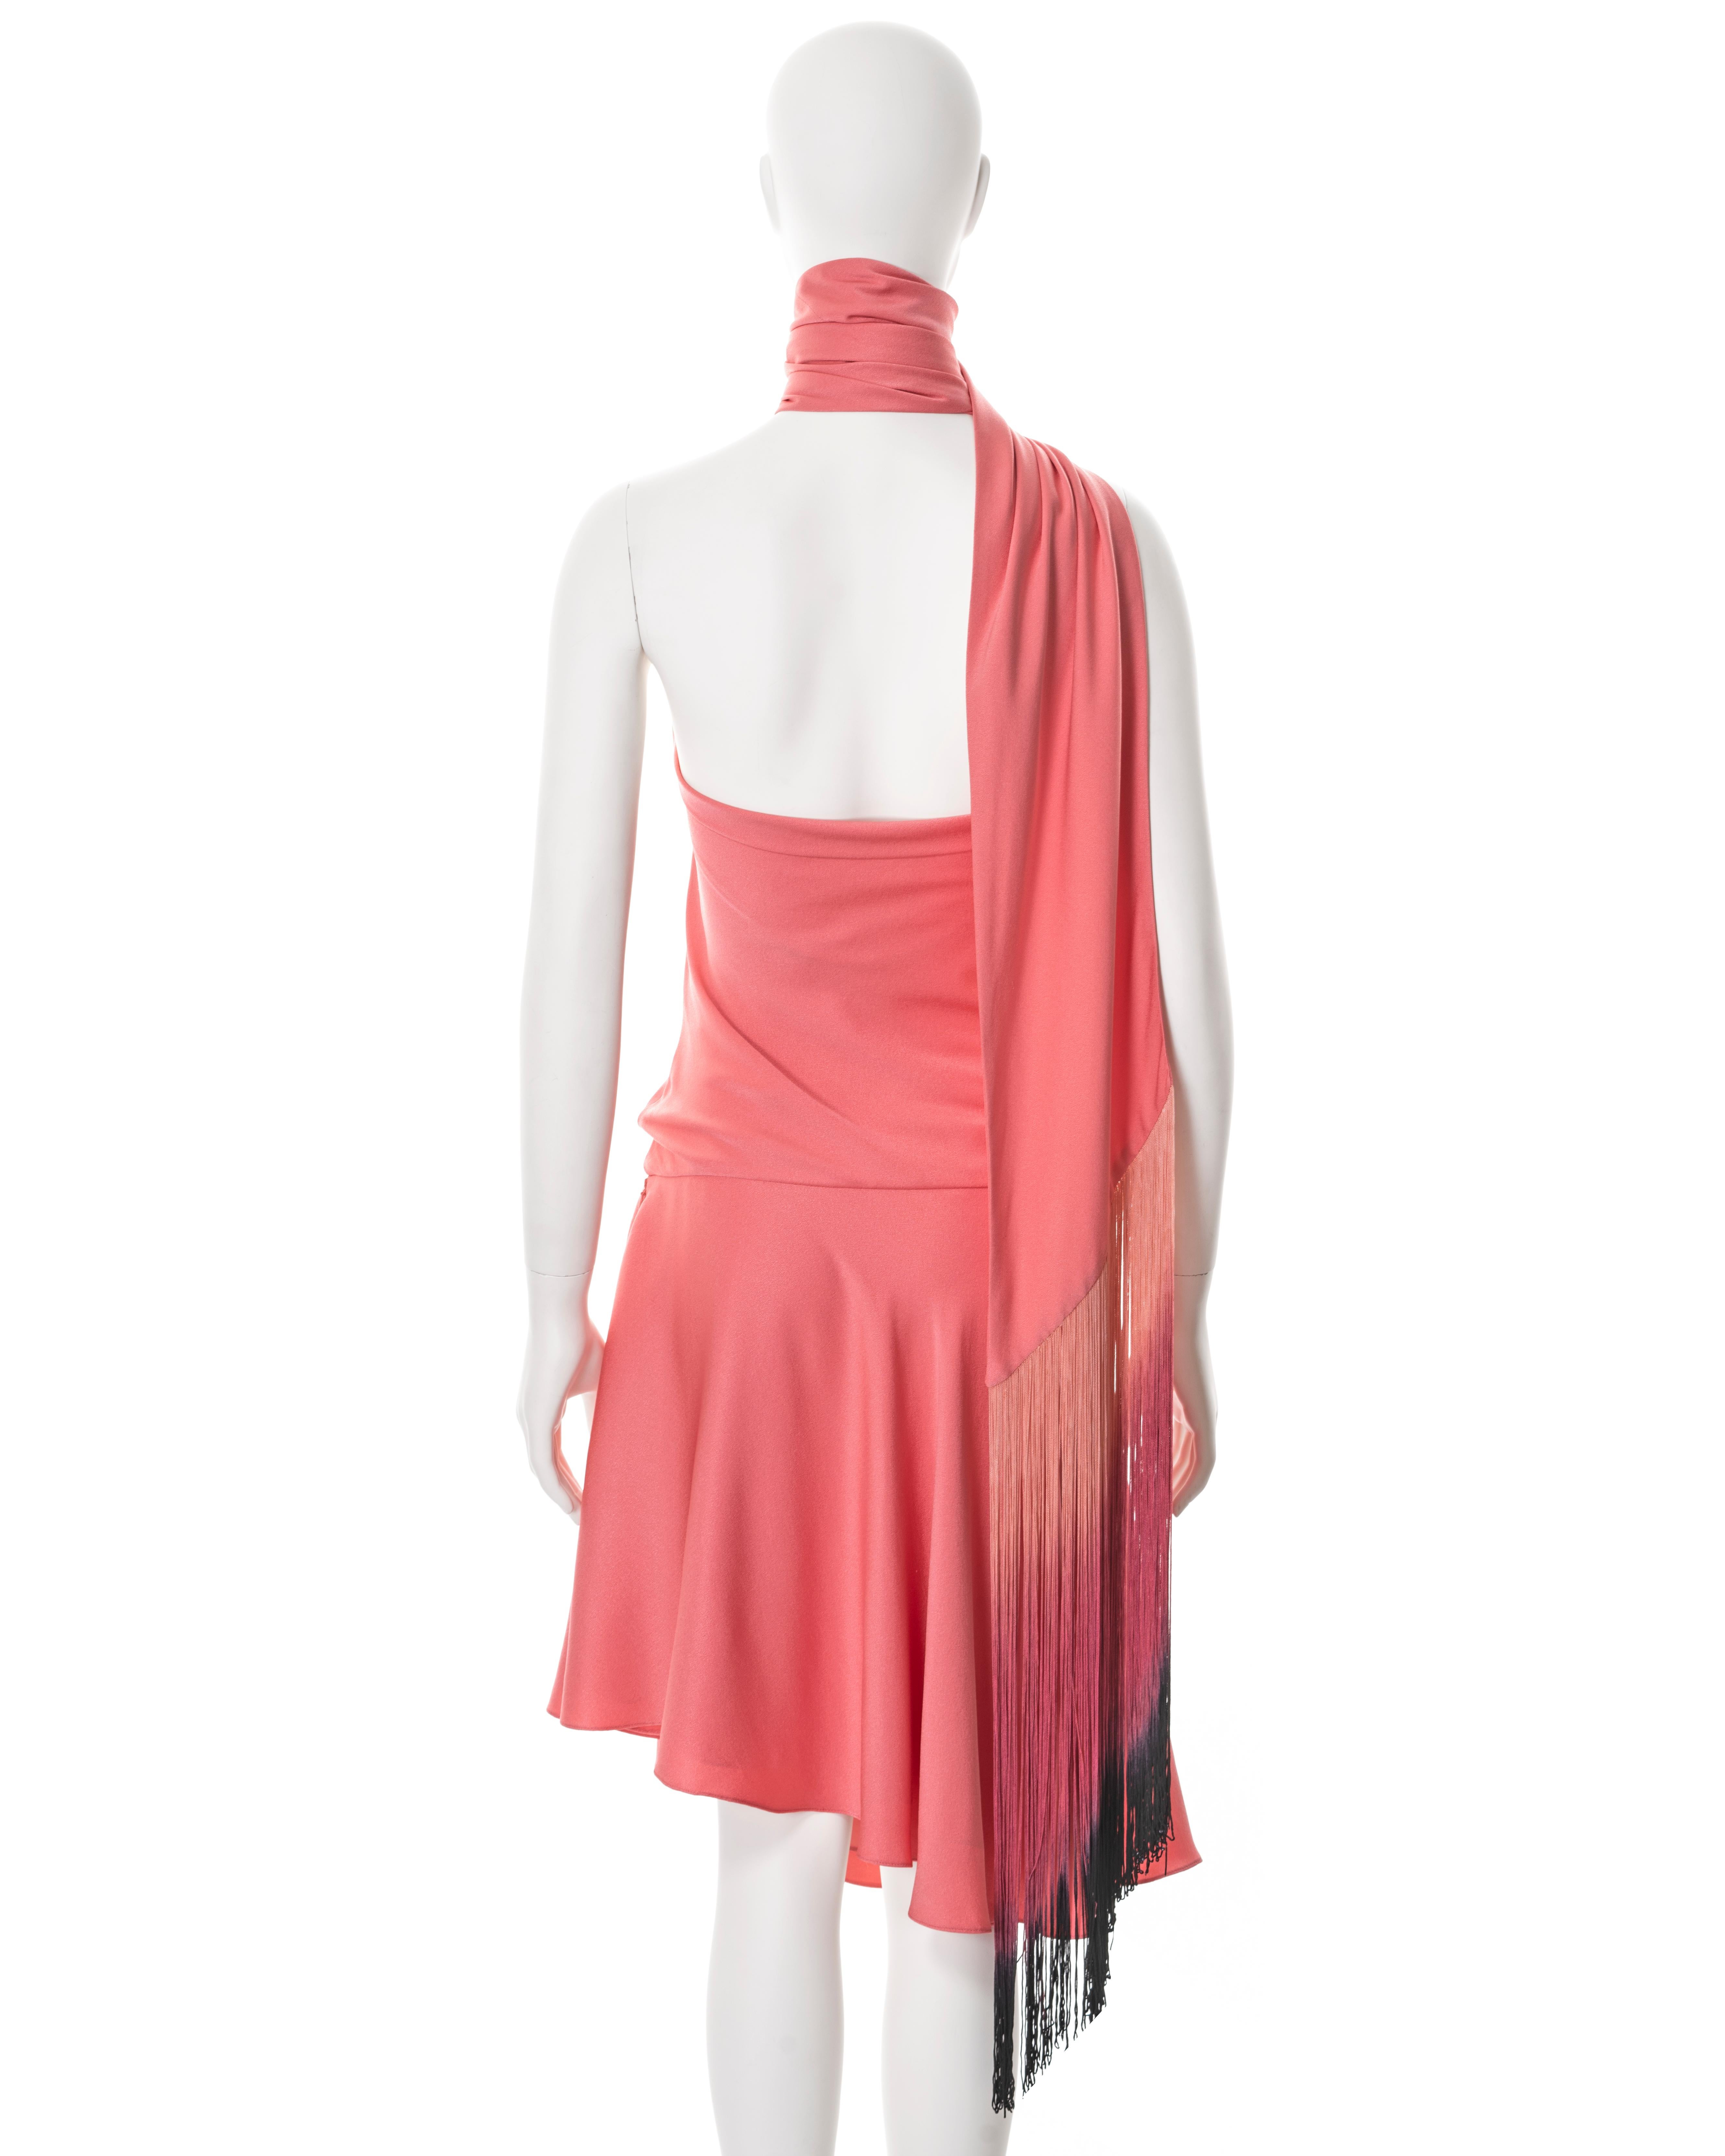 Alexander McQueen pink bias cut silk fringed scarf dress, ss 2008 For Sale 3